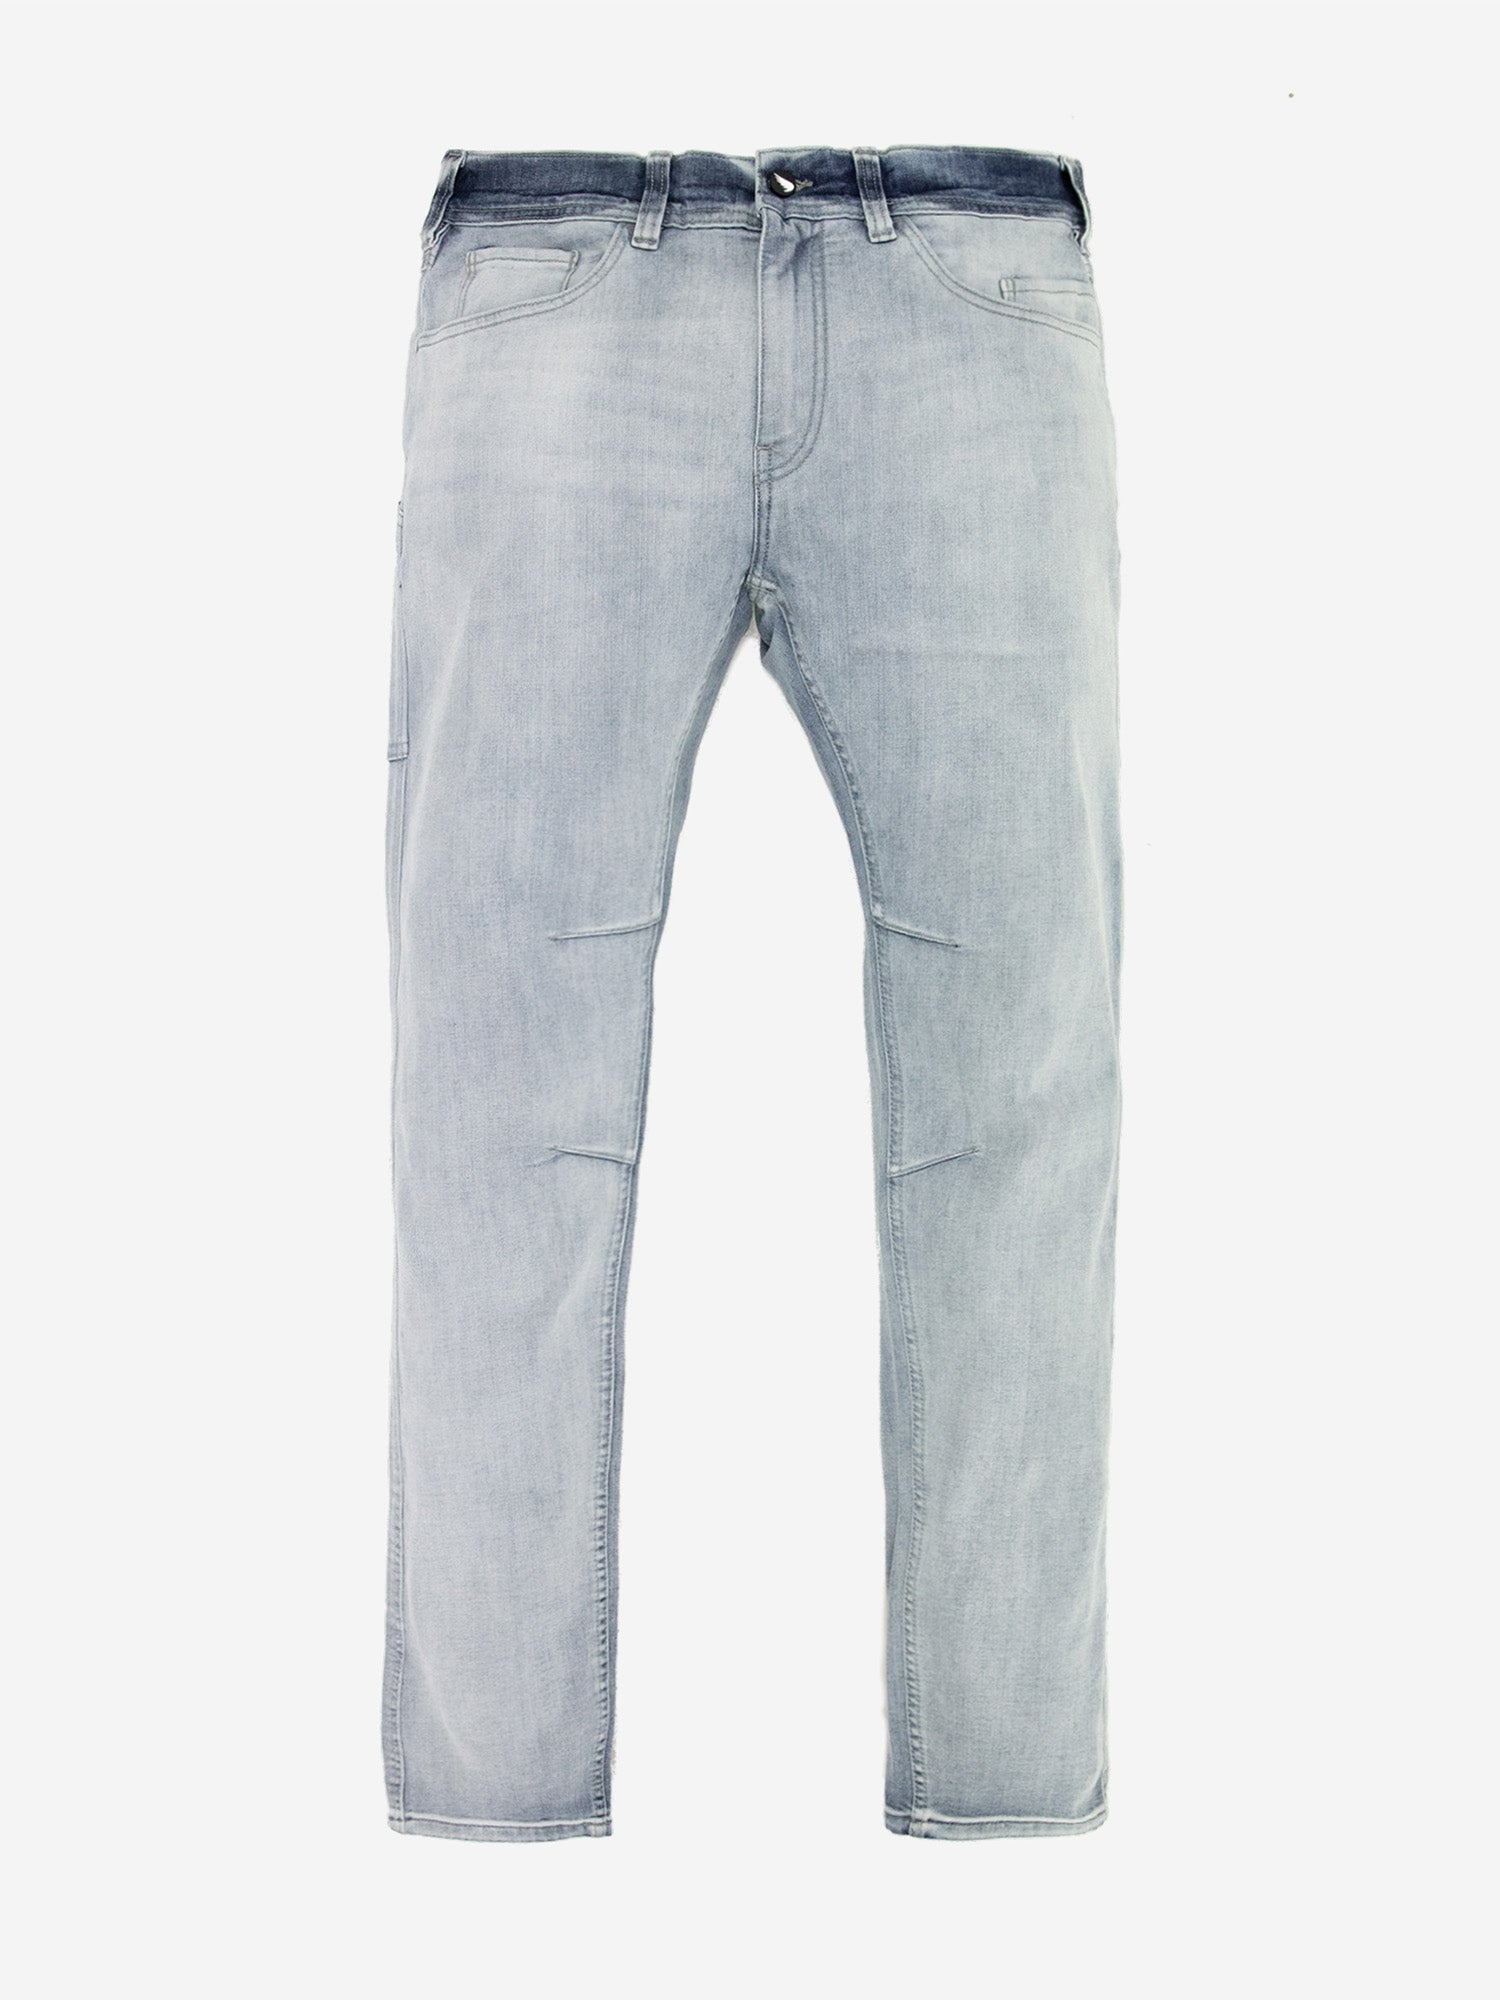 Vintage LEVI'S 510-0217 30x34 USA Workwear Denim Jeans